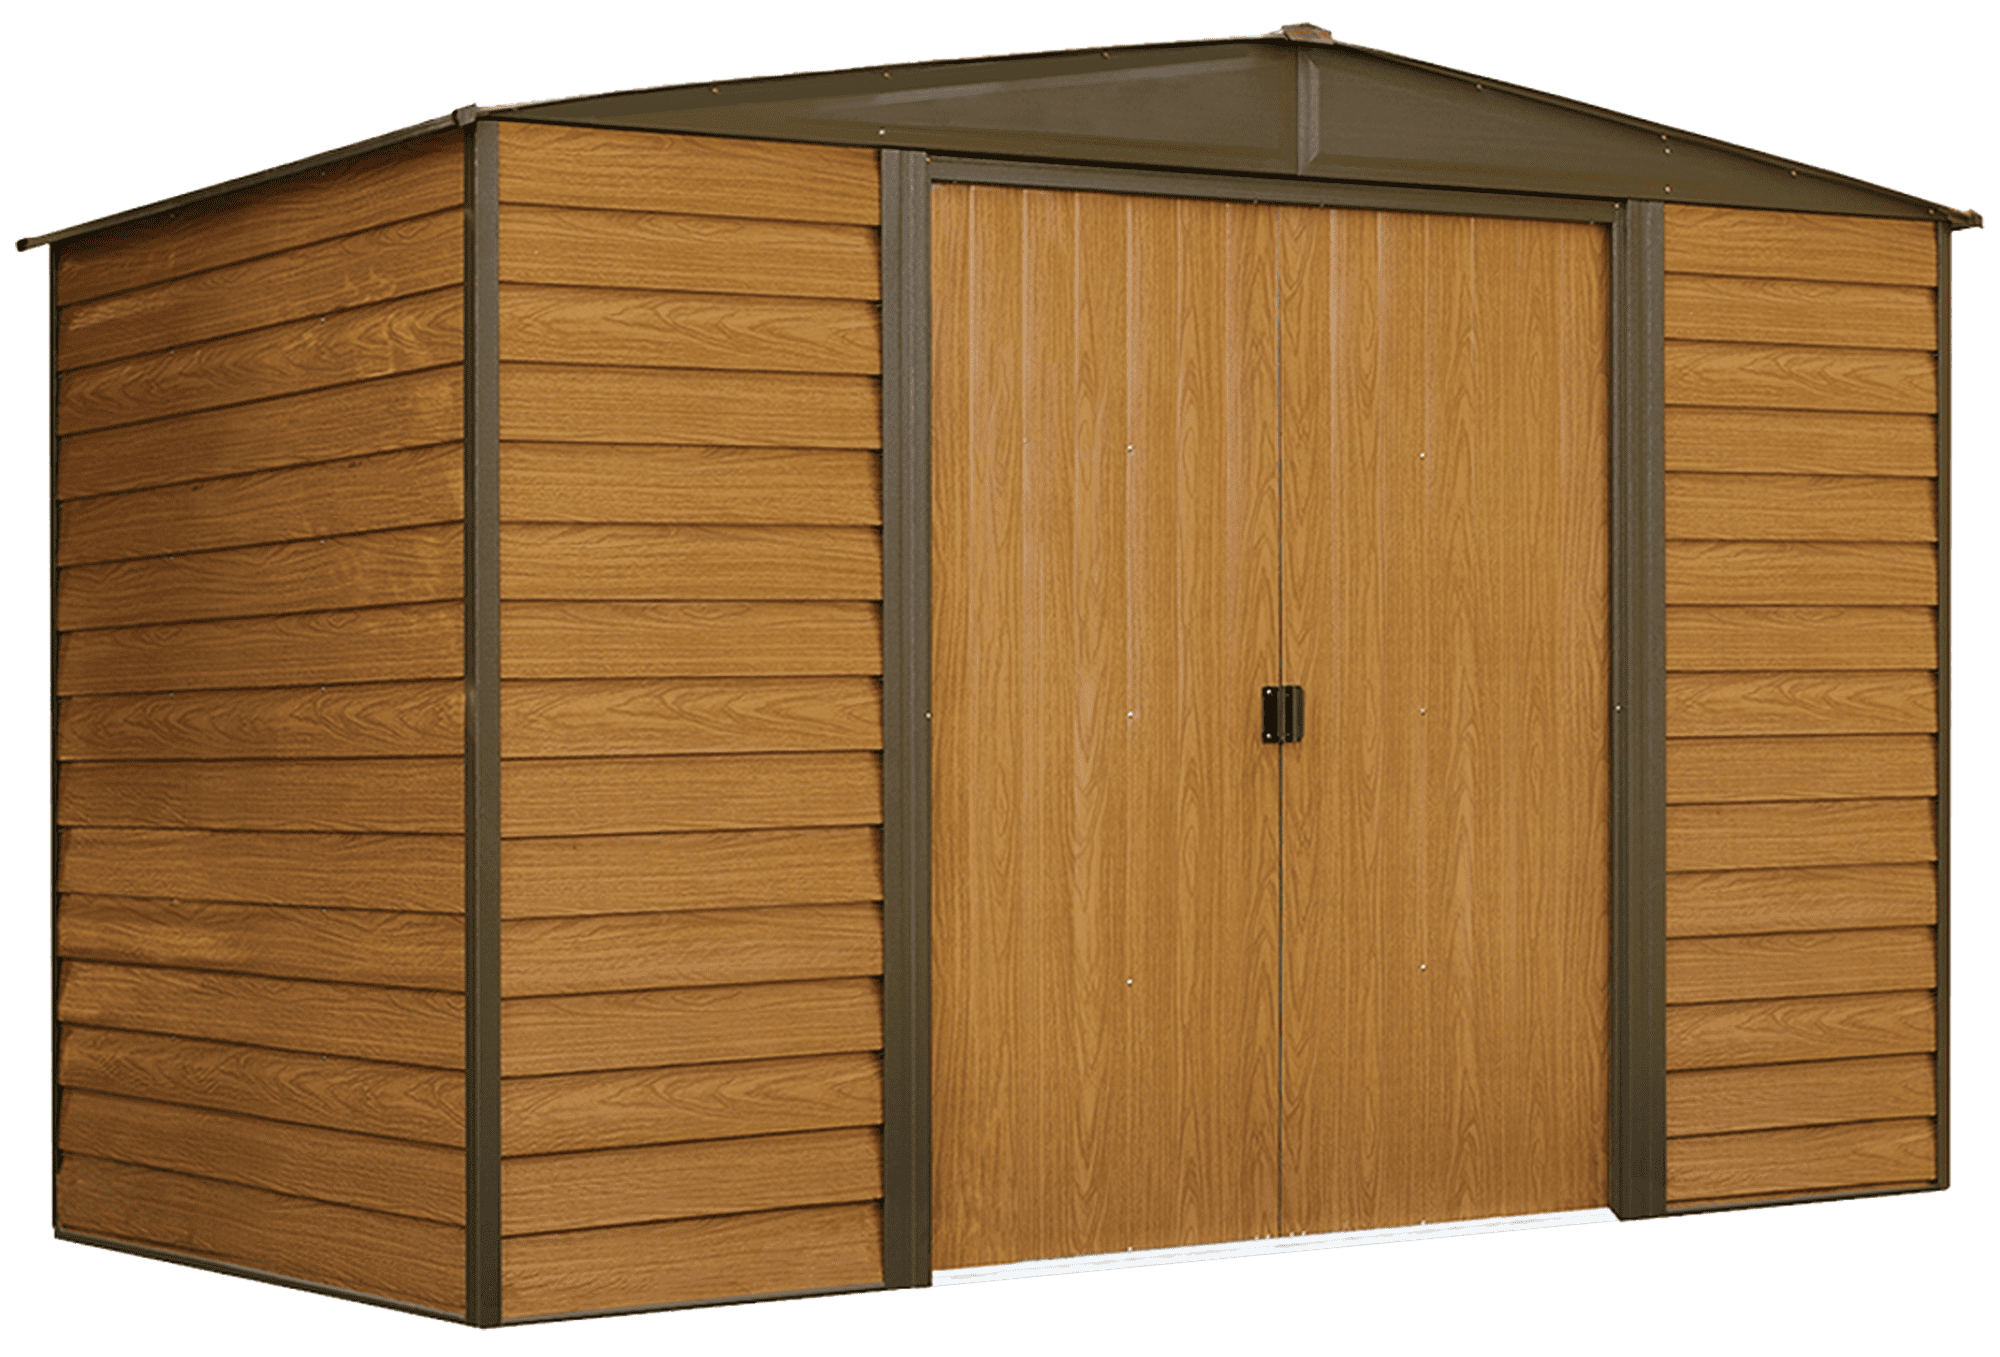 Wood panels for sheds